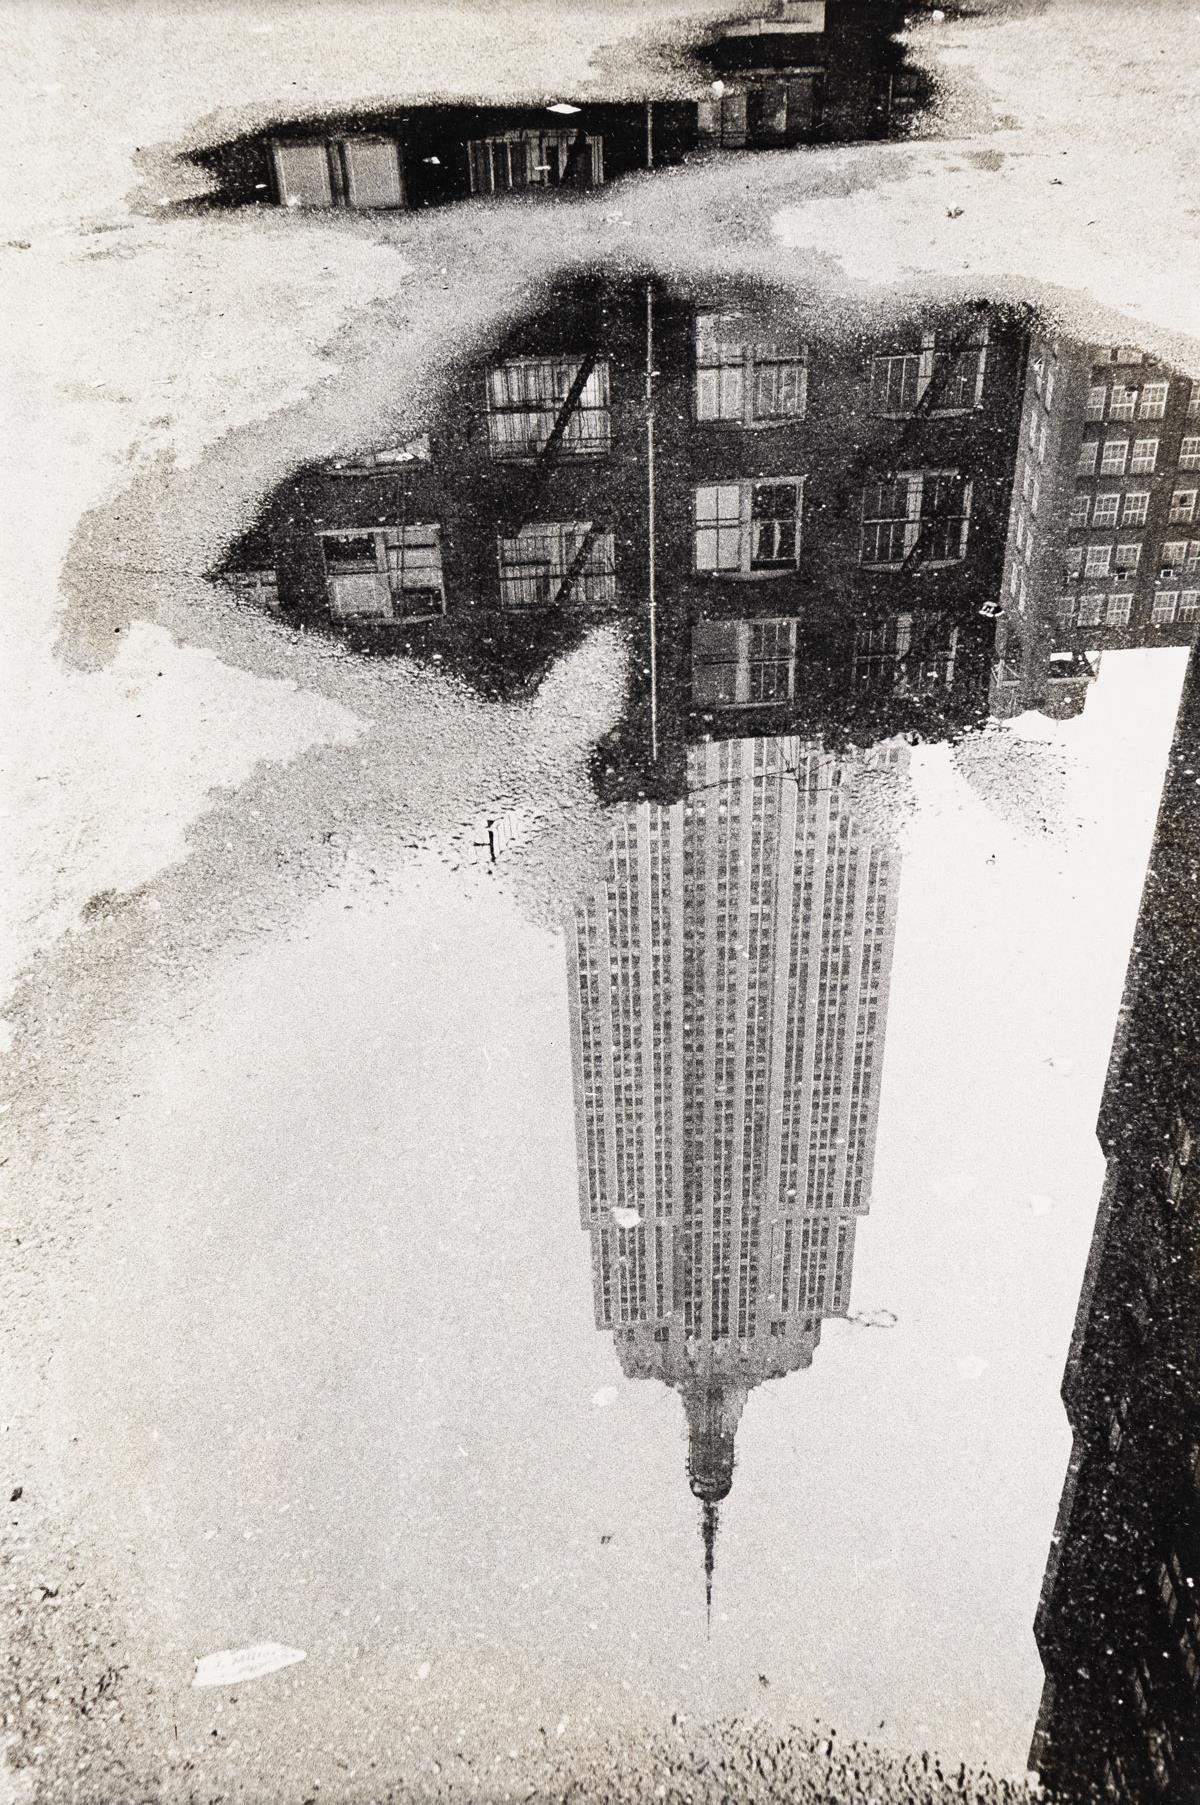 Black and White Photograph Andre Kertesz - Flaque d'eau, Empire State Building, 1967